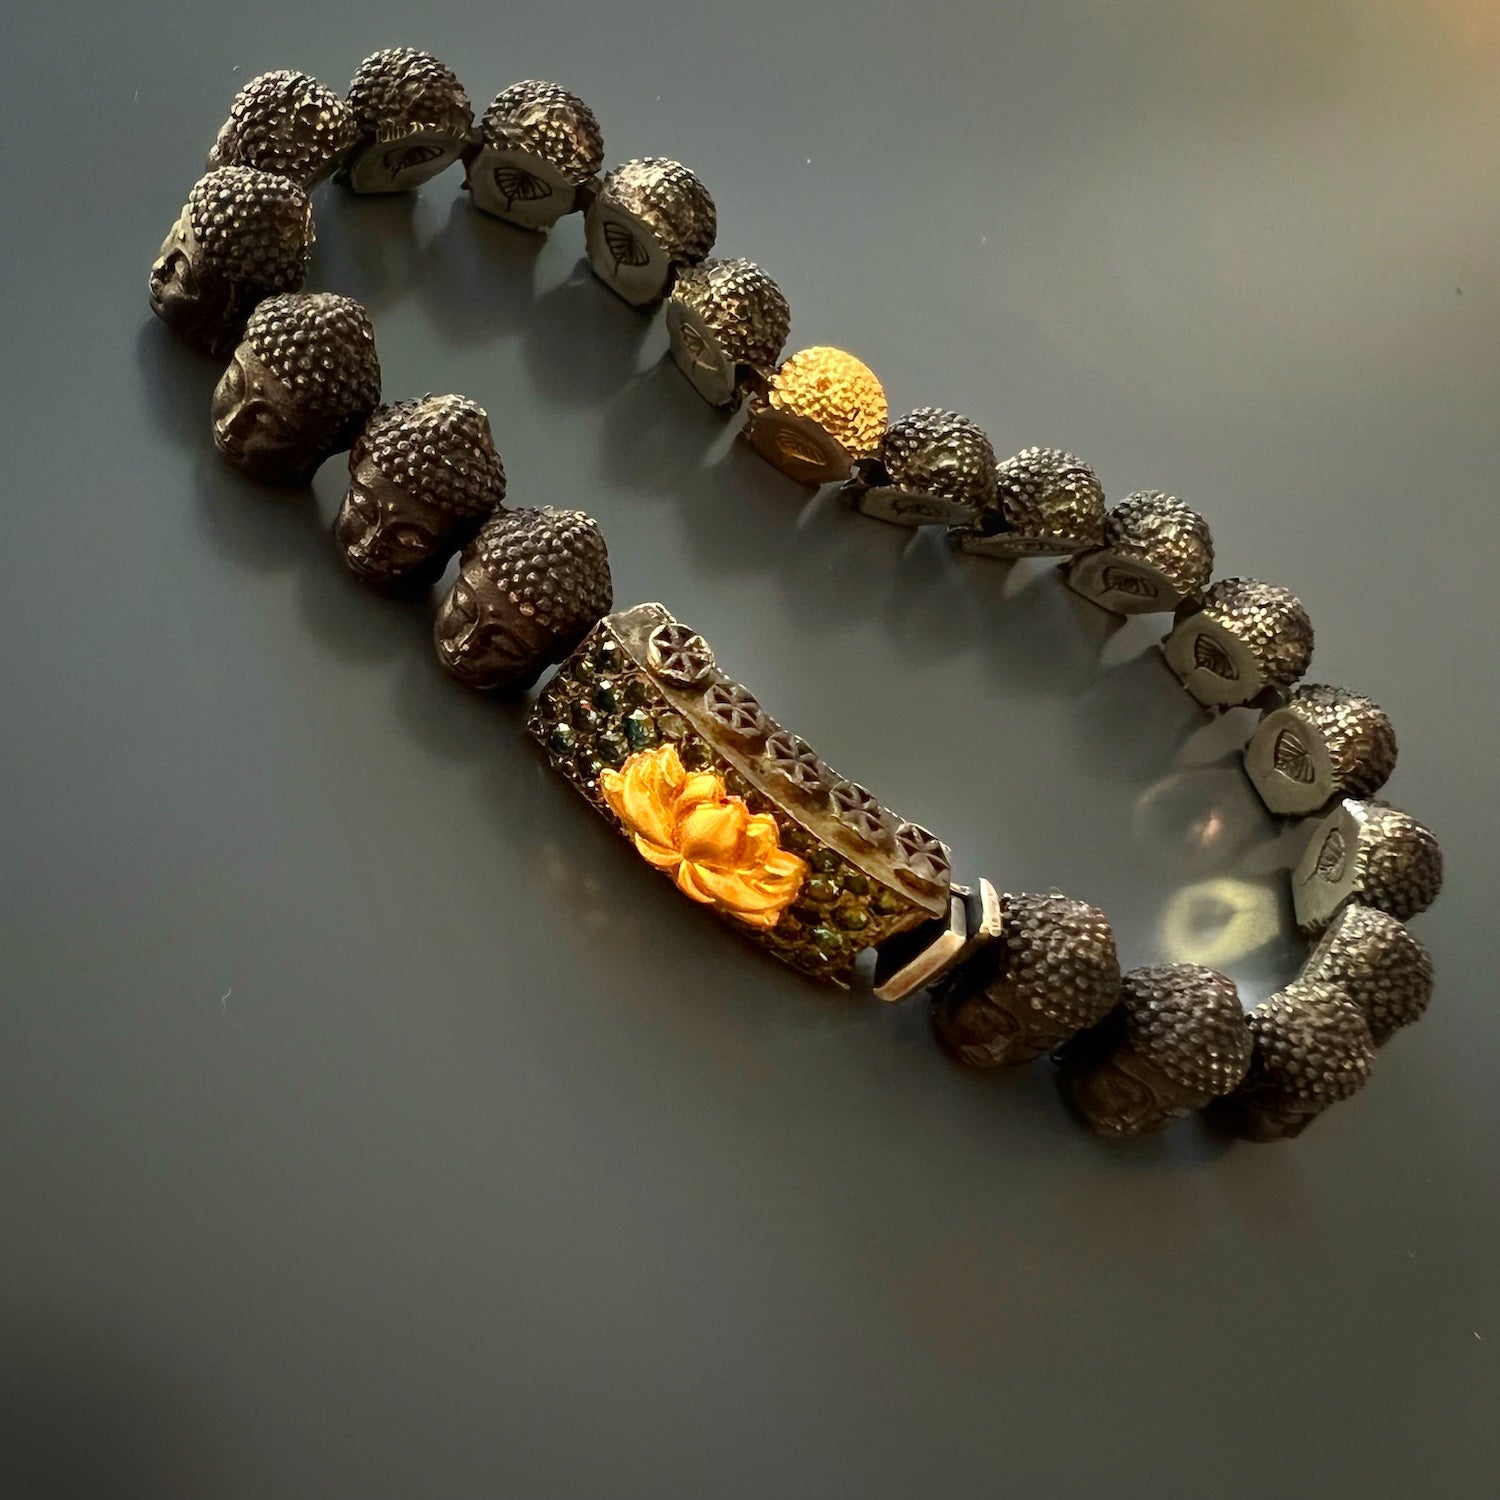 Unique Piece - Handmade Gold and Silver Buddha Bracelet with Blue Diamonds.